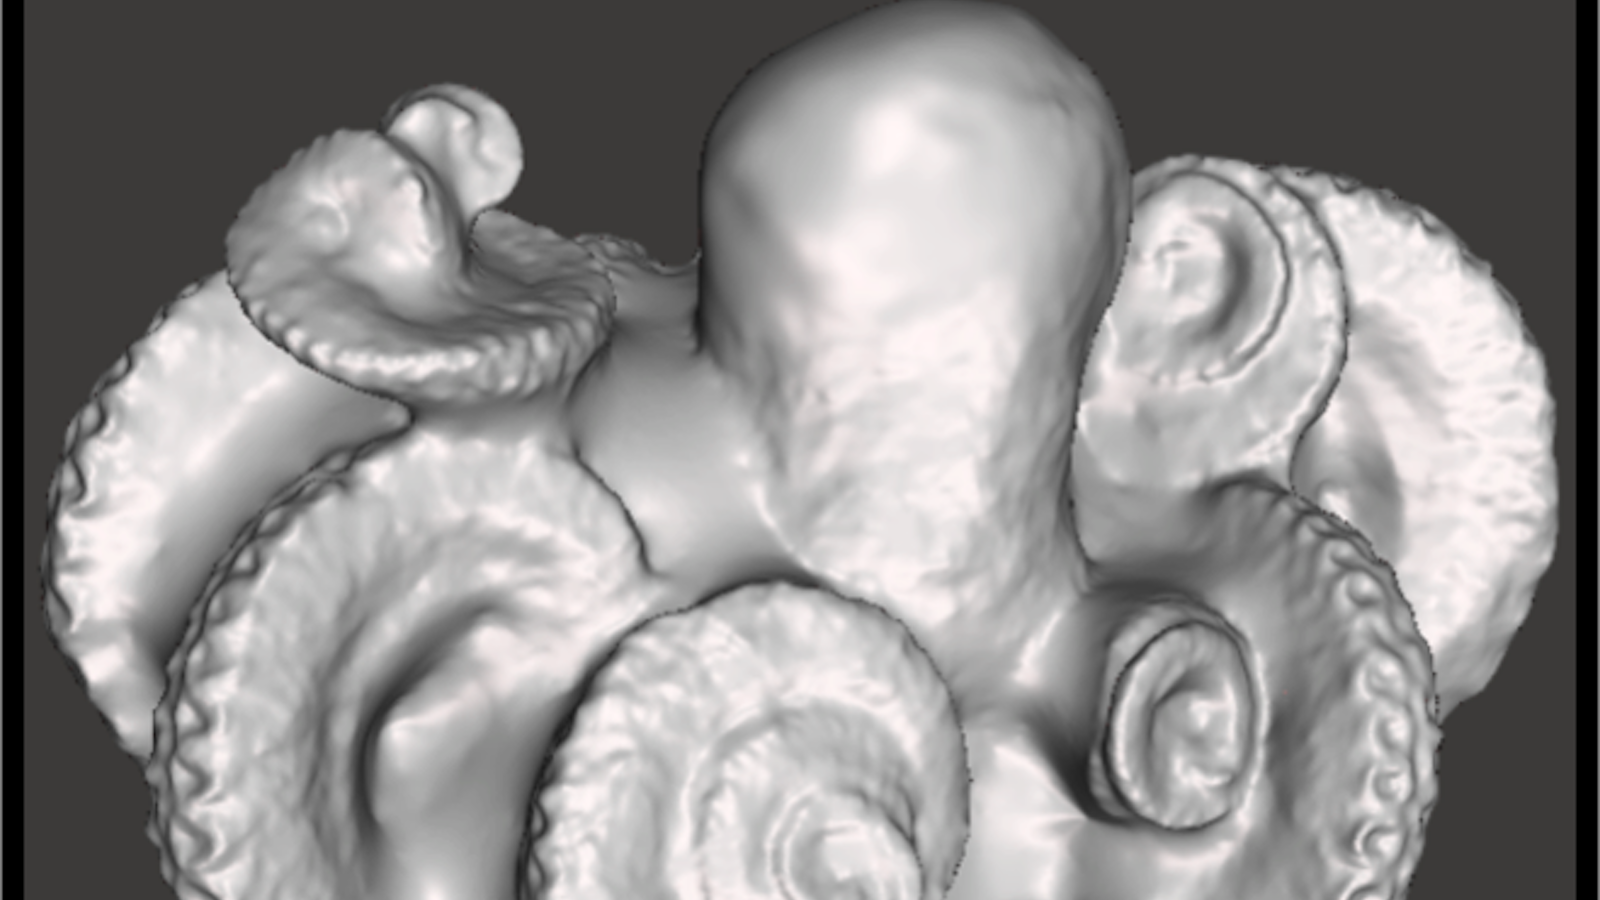 3D model image of an octopus